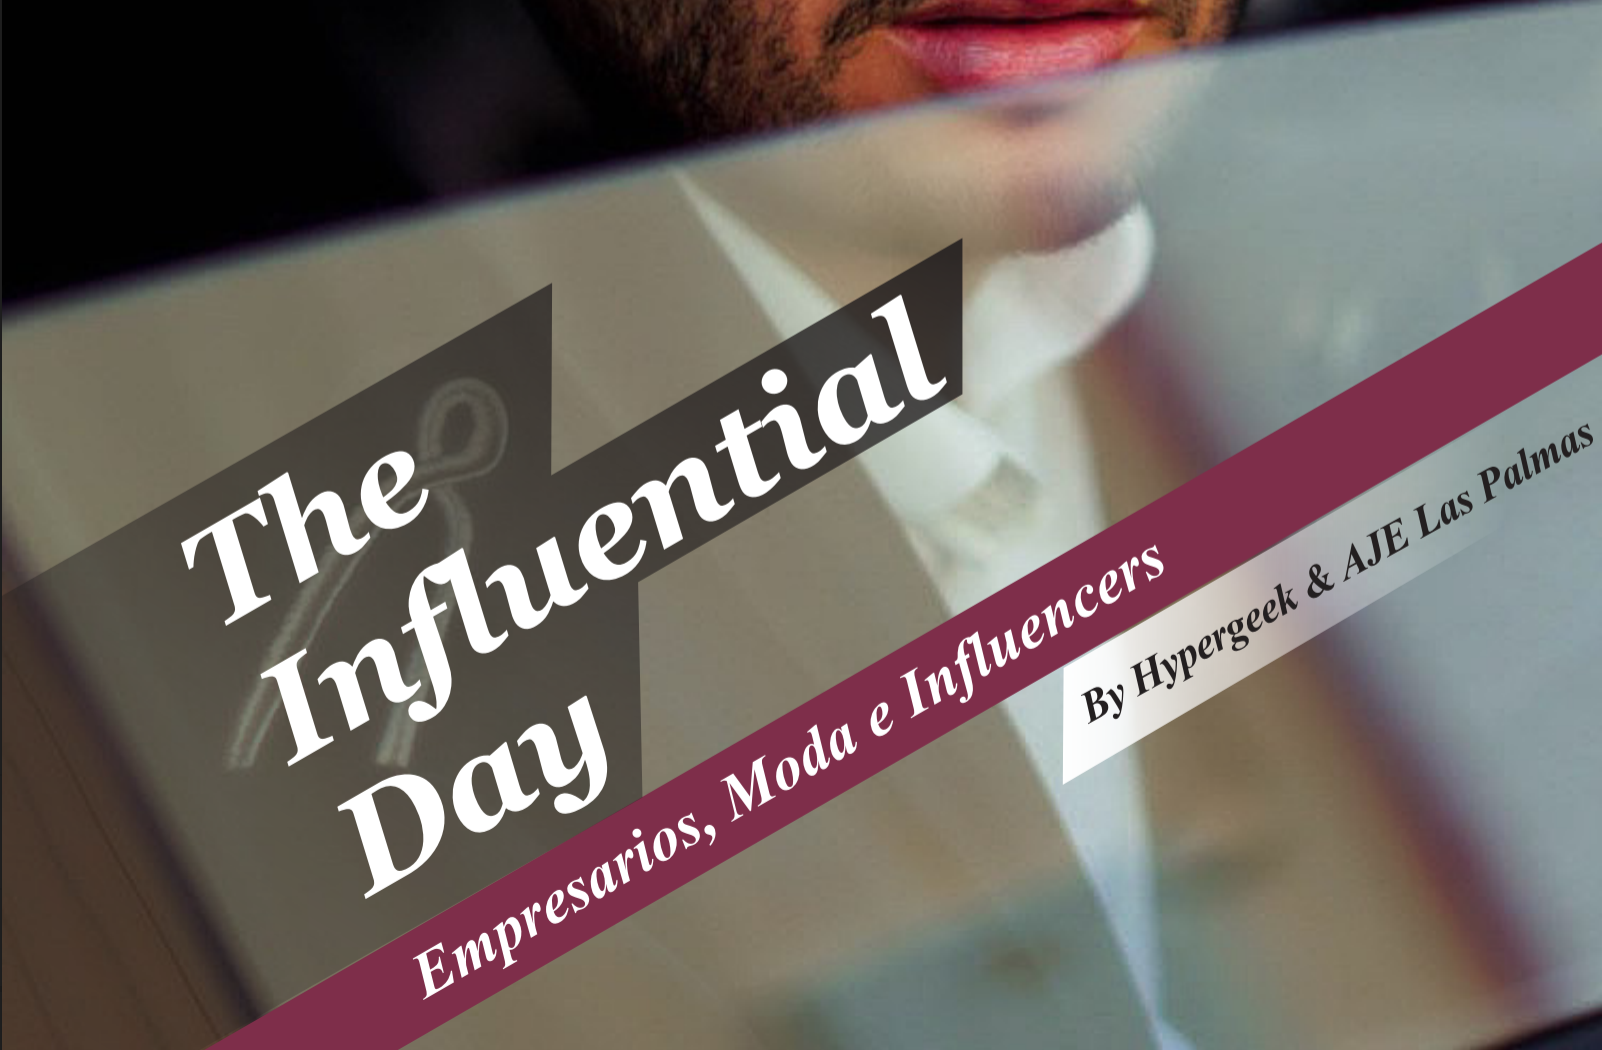 Evento The Influential Day empresarios e influencers en Las Palmas